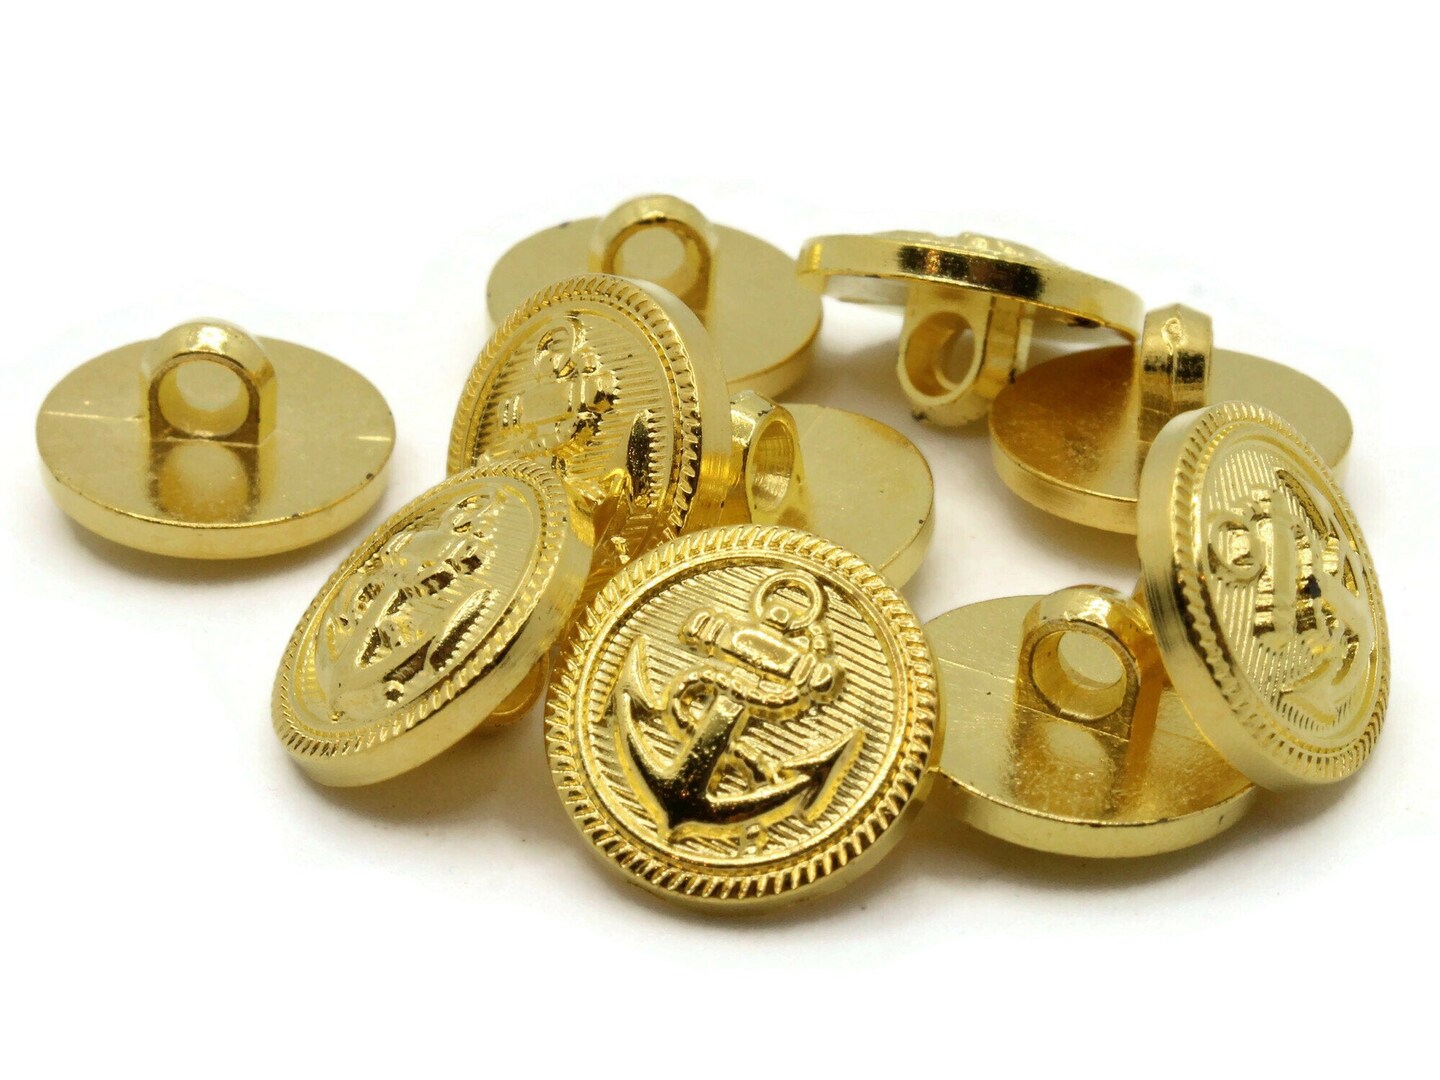 10 15mm Anchor Buttons - Plastic Gold Shank Buttons